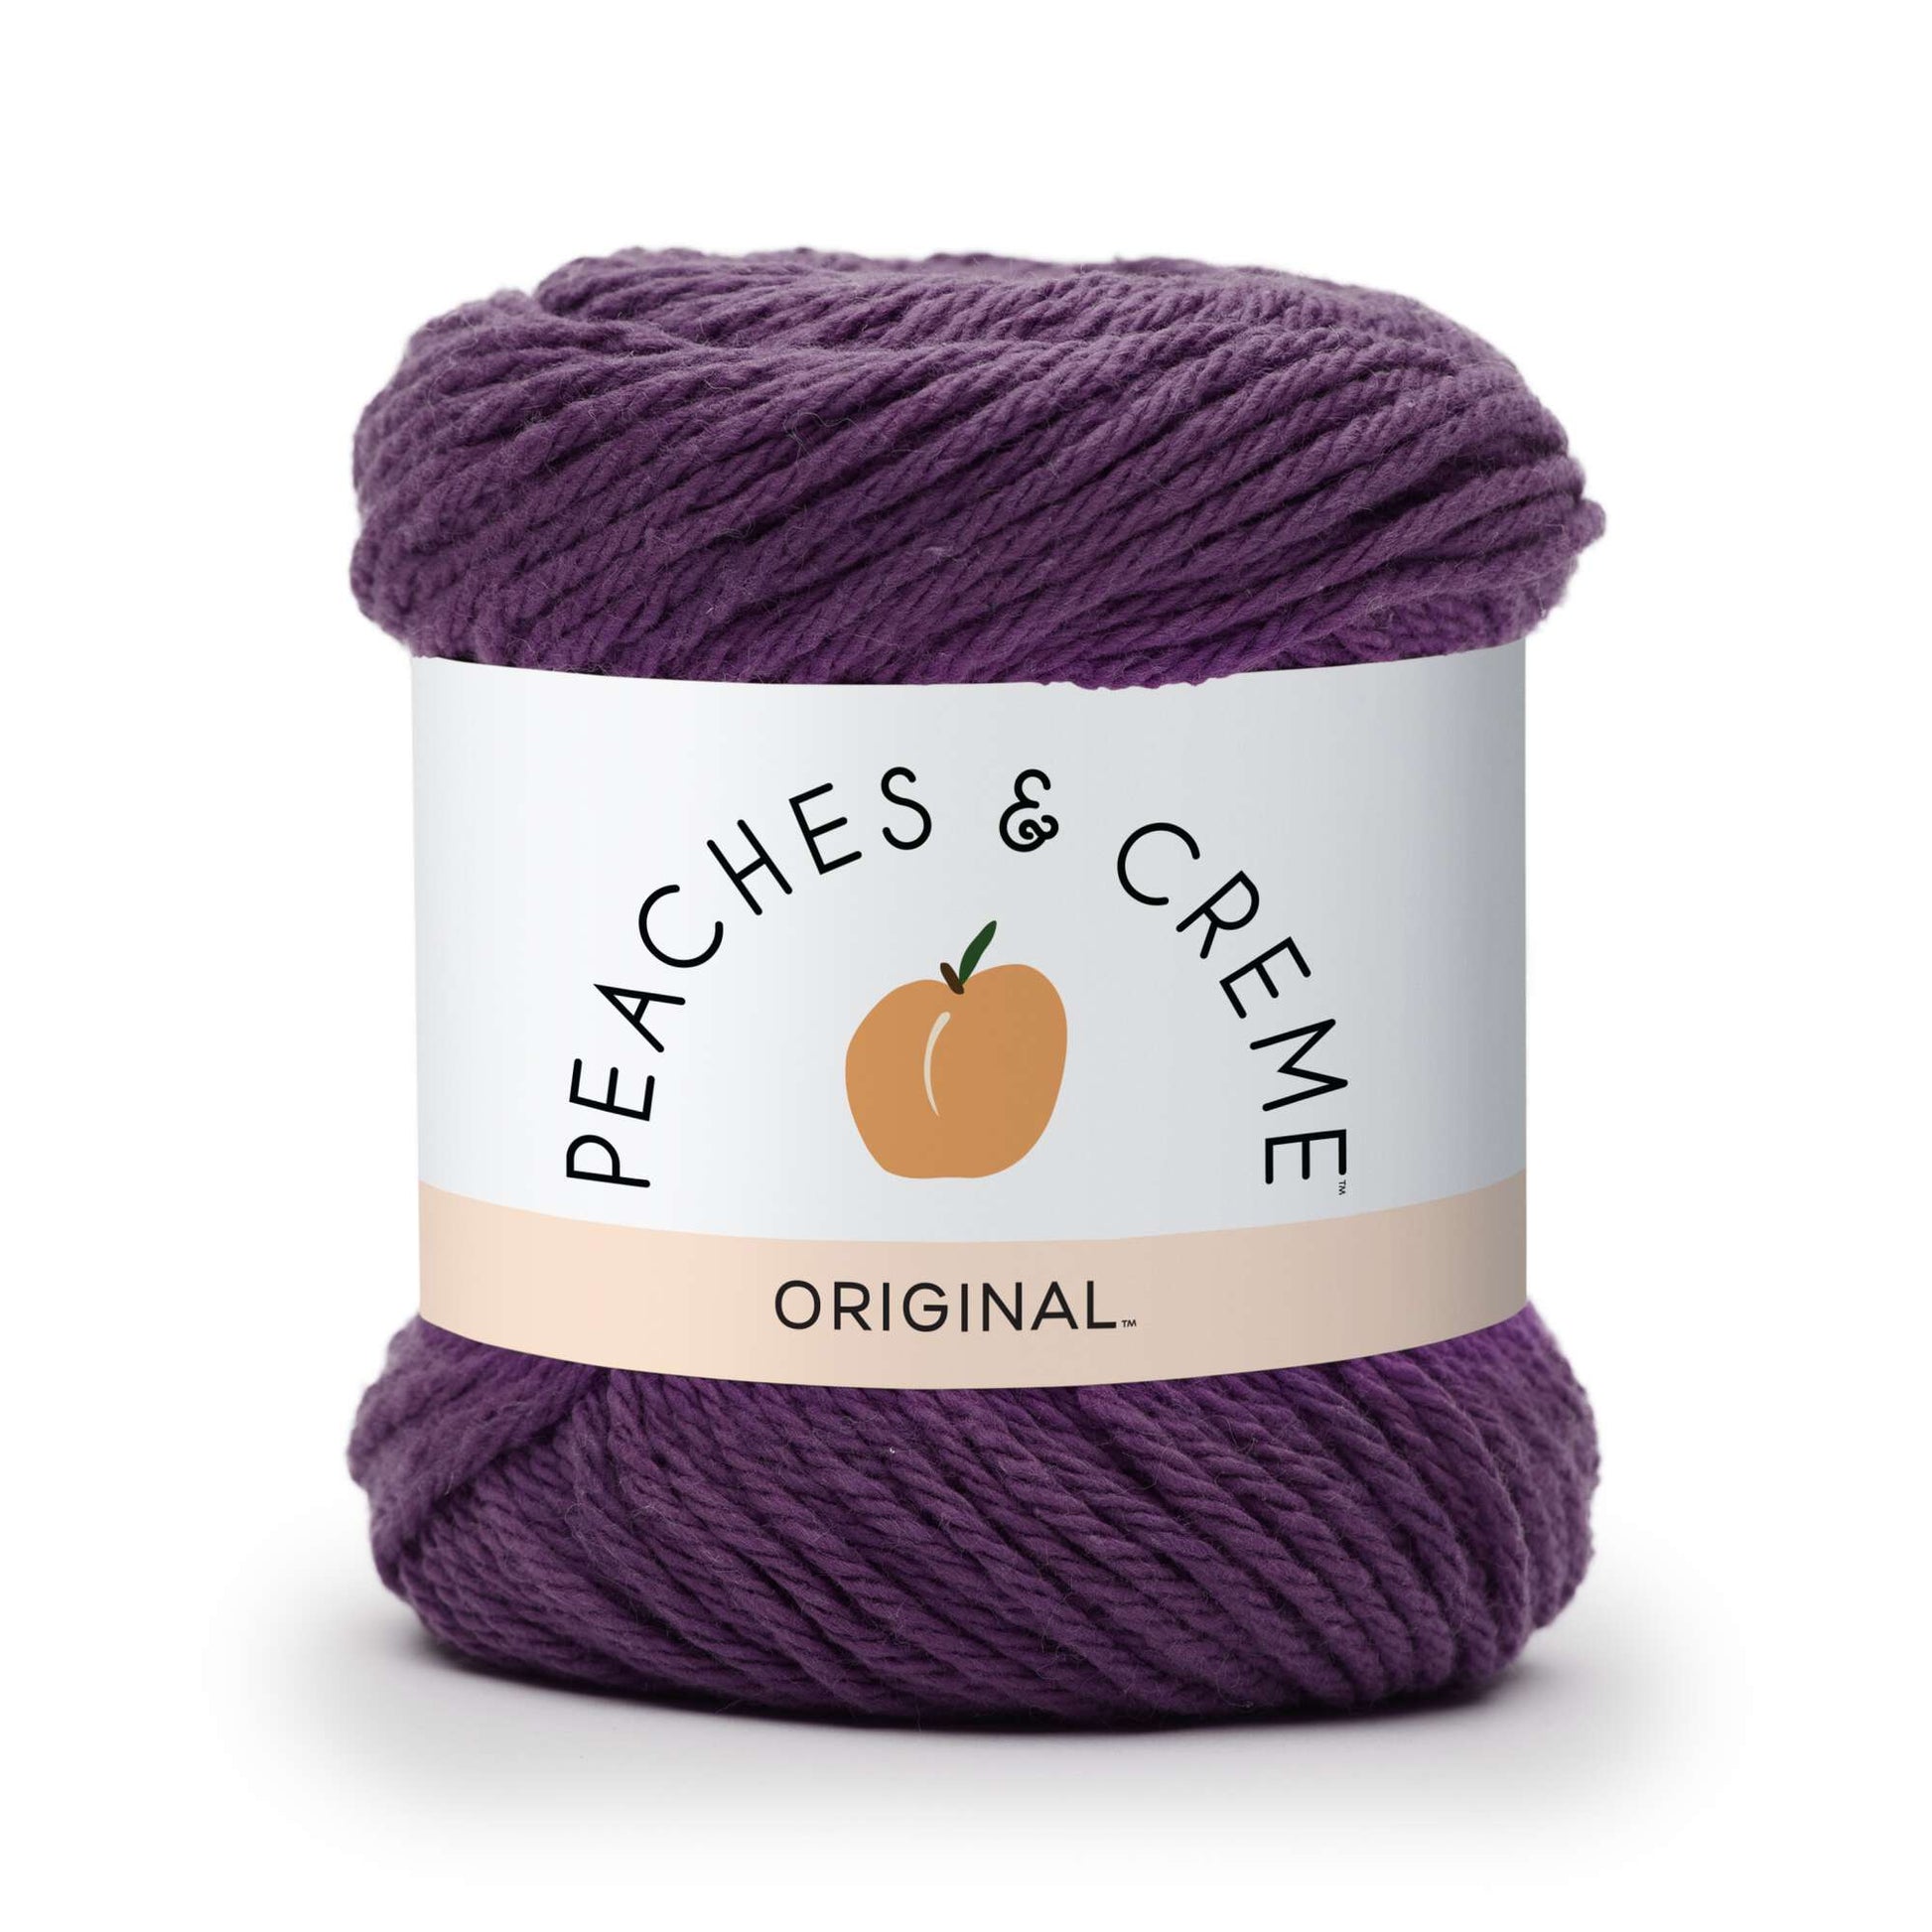 Peaches & Creme Yarn